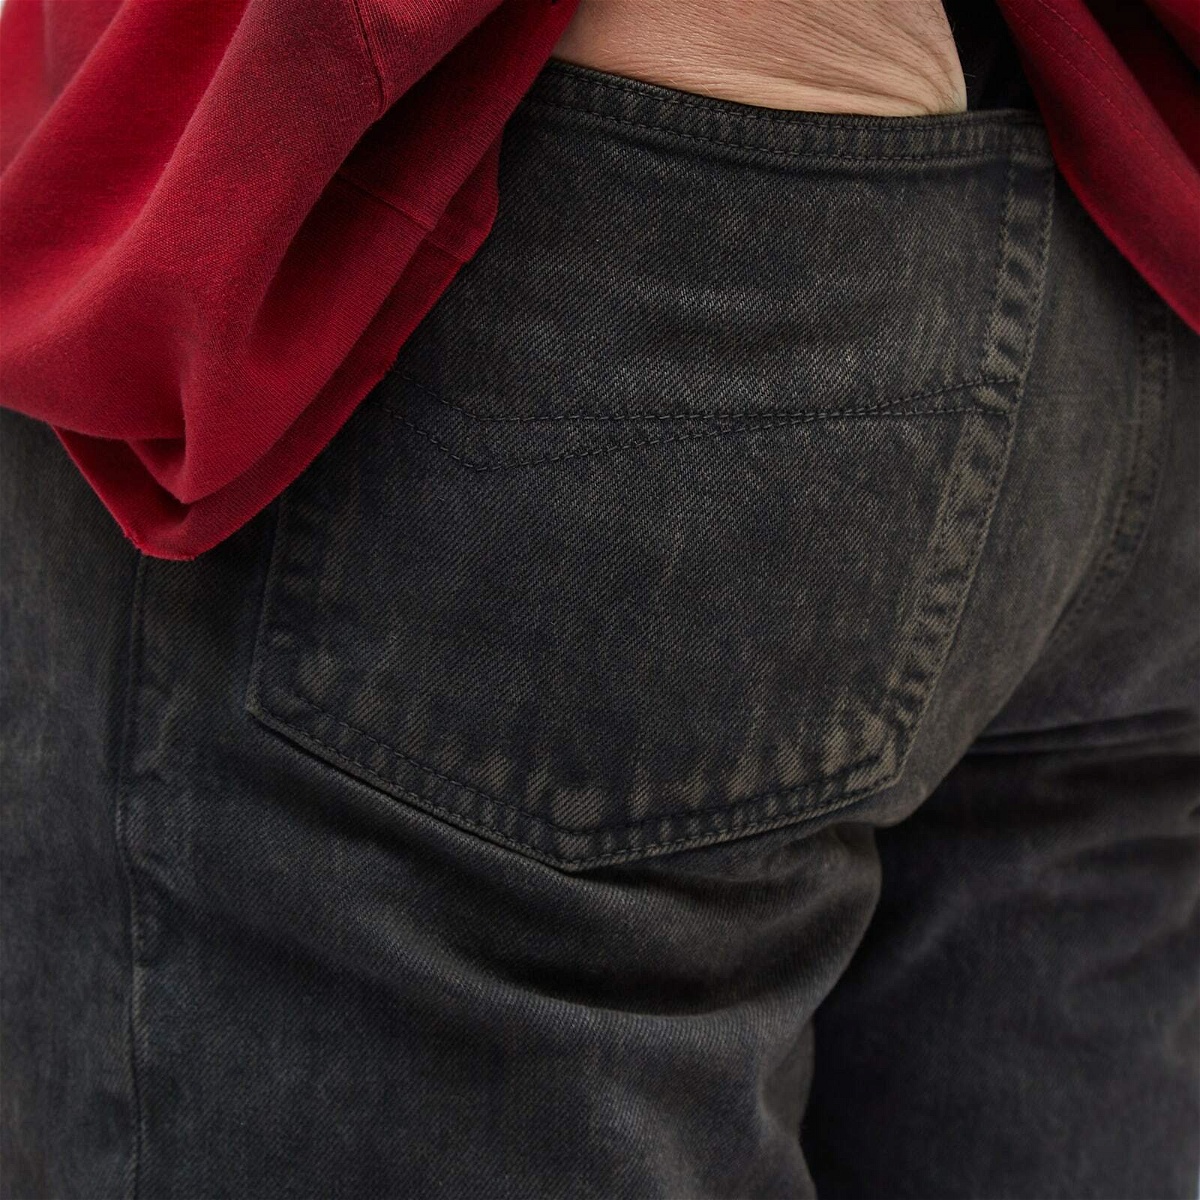 Balenciaga Men's Japanese Denim Jeans in Dark Brown